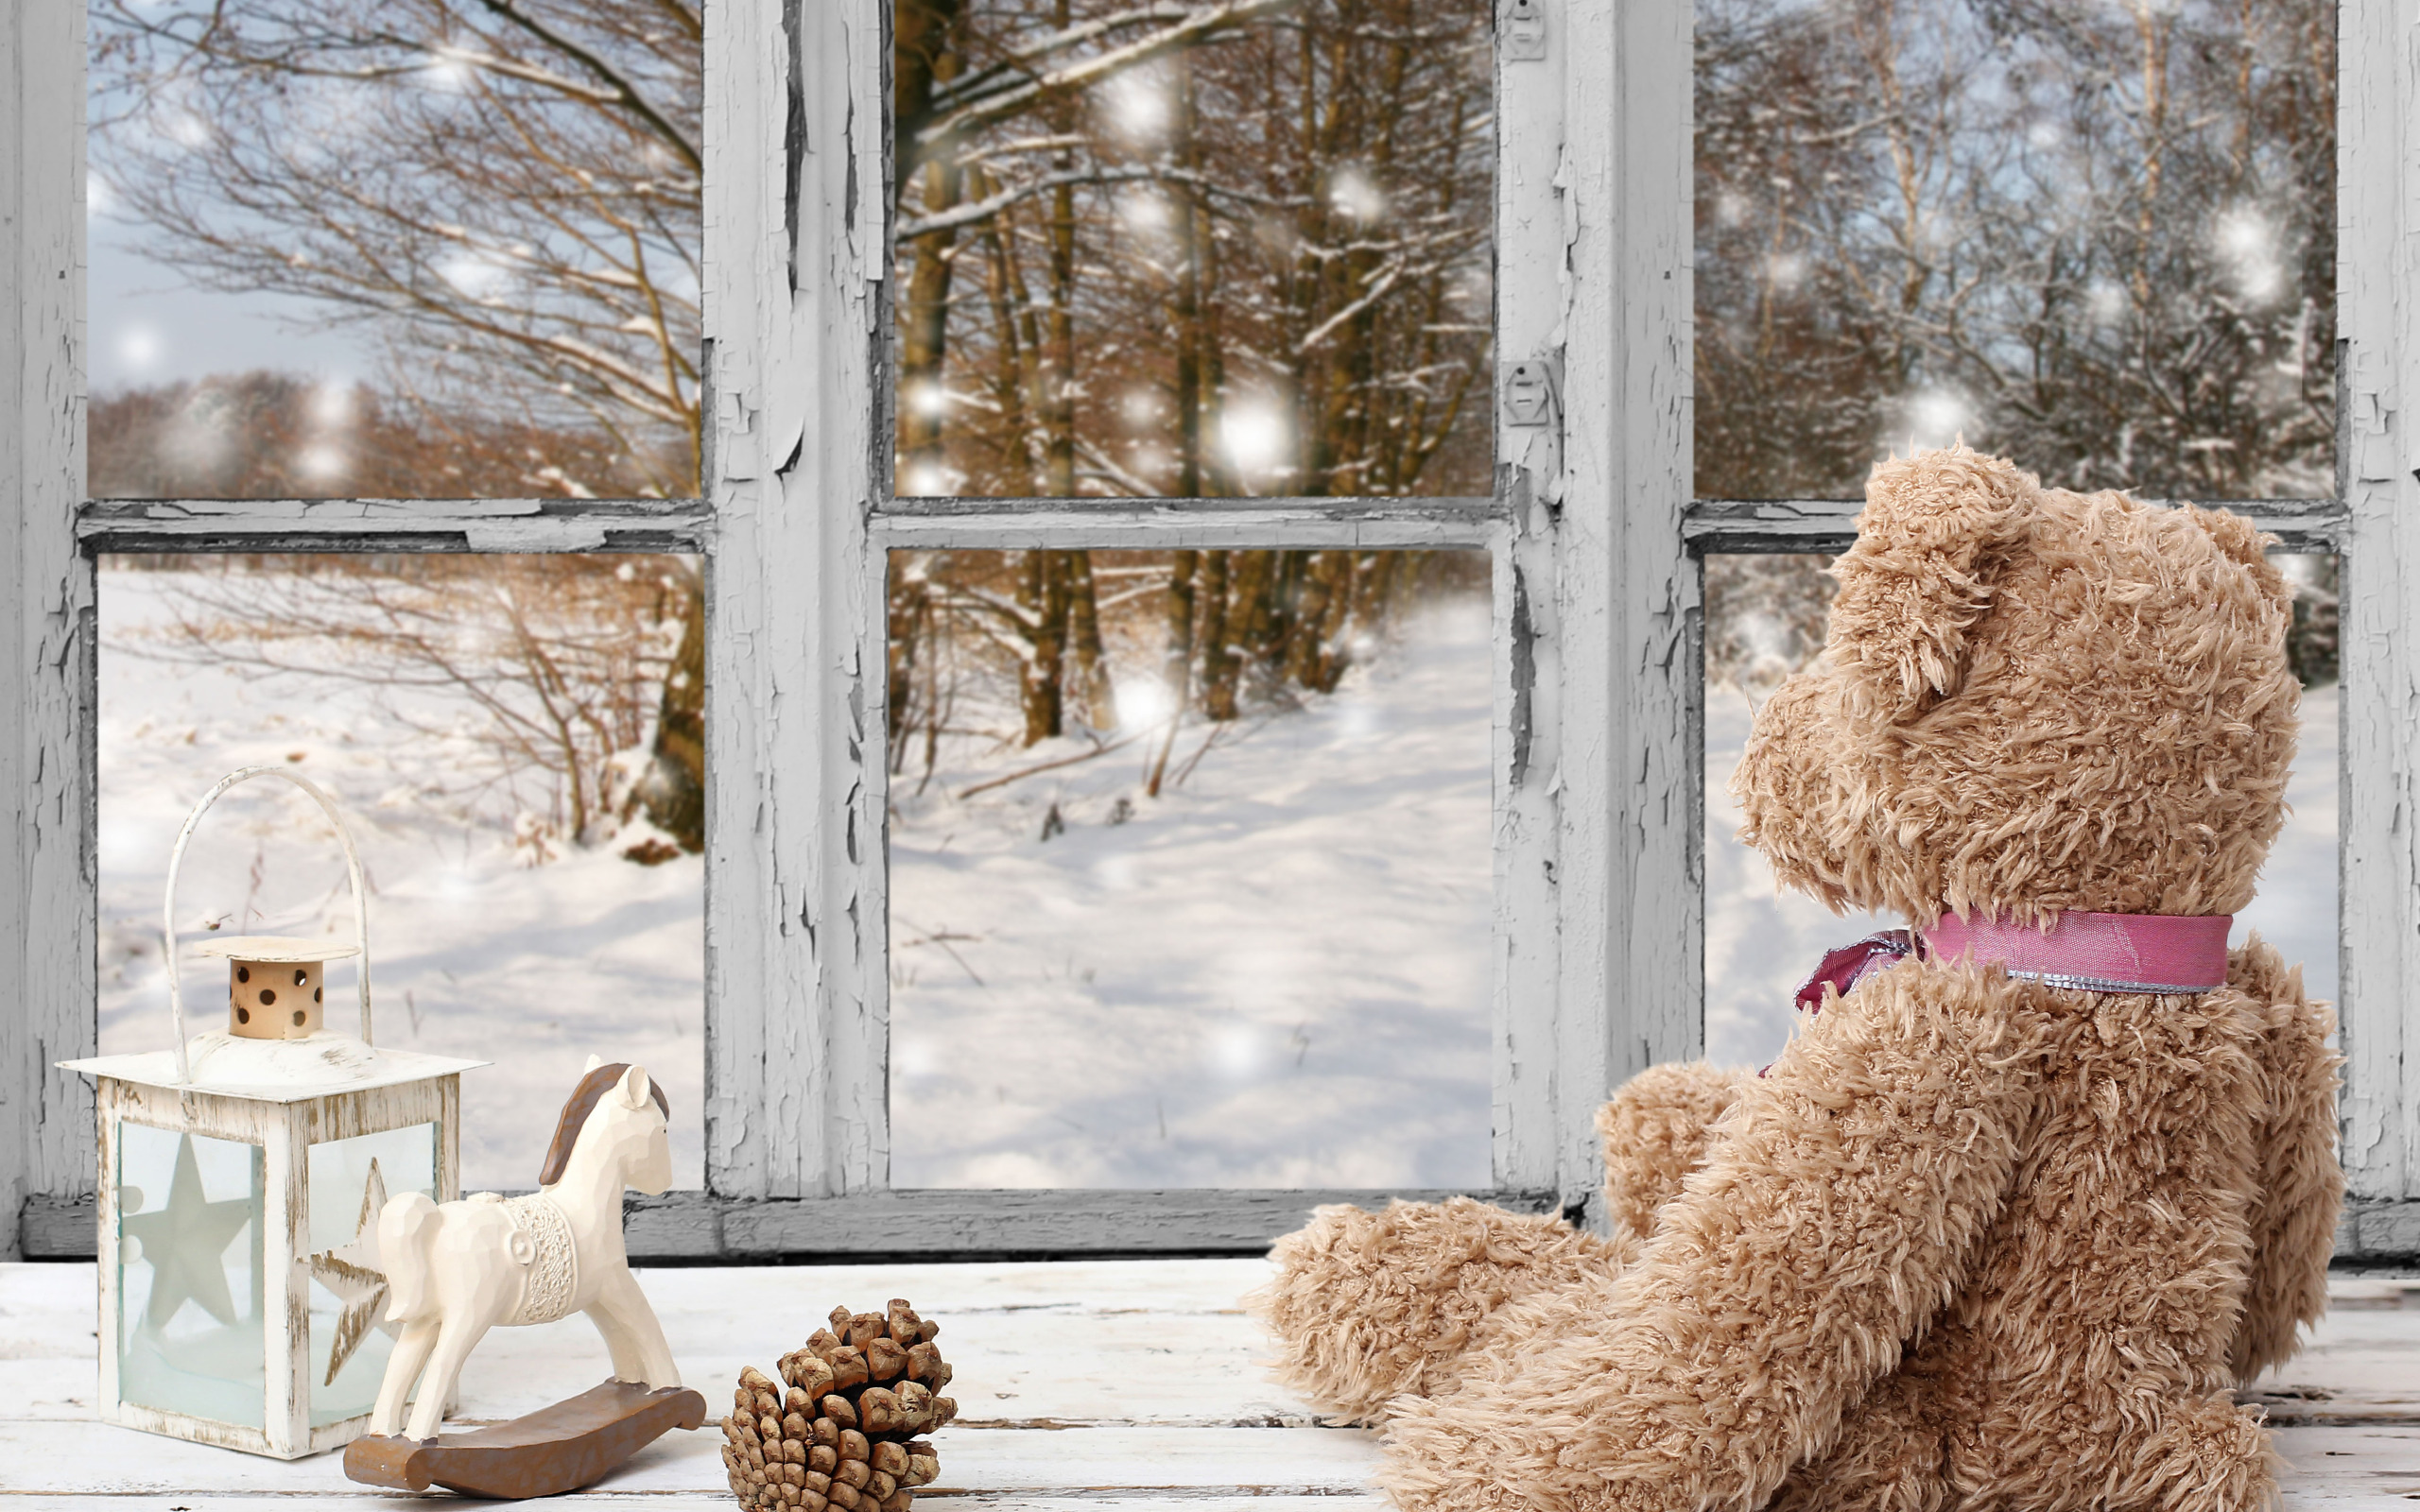 Теплая снежная зима. Снег за окном. Зимний подоконник. Уютная зима. Окно зима.